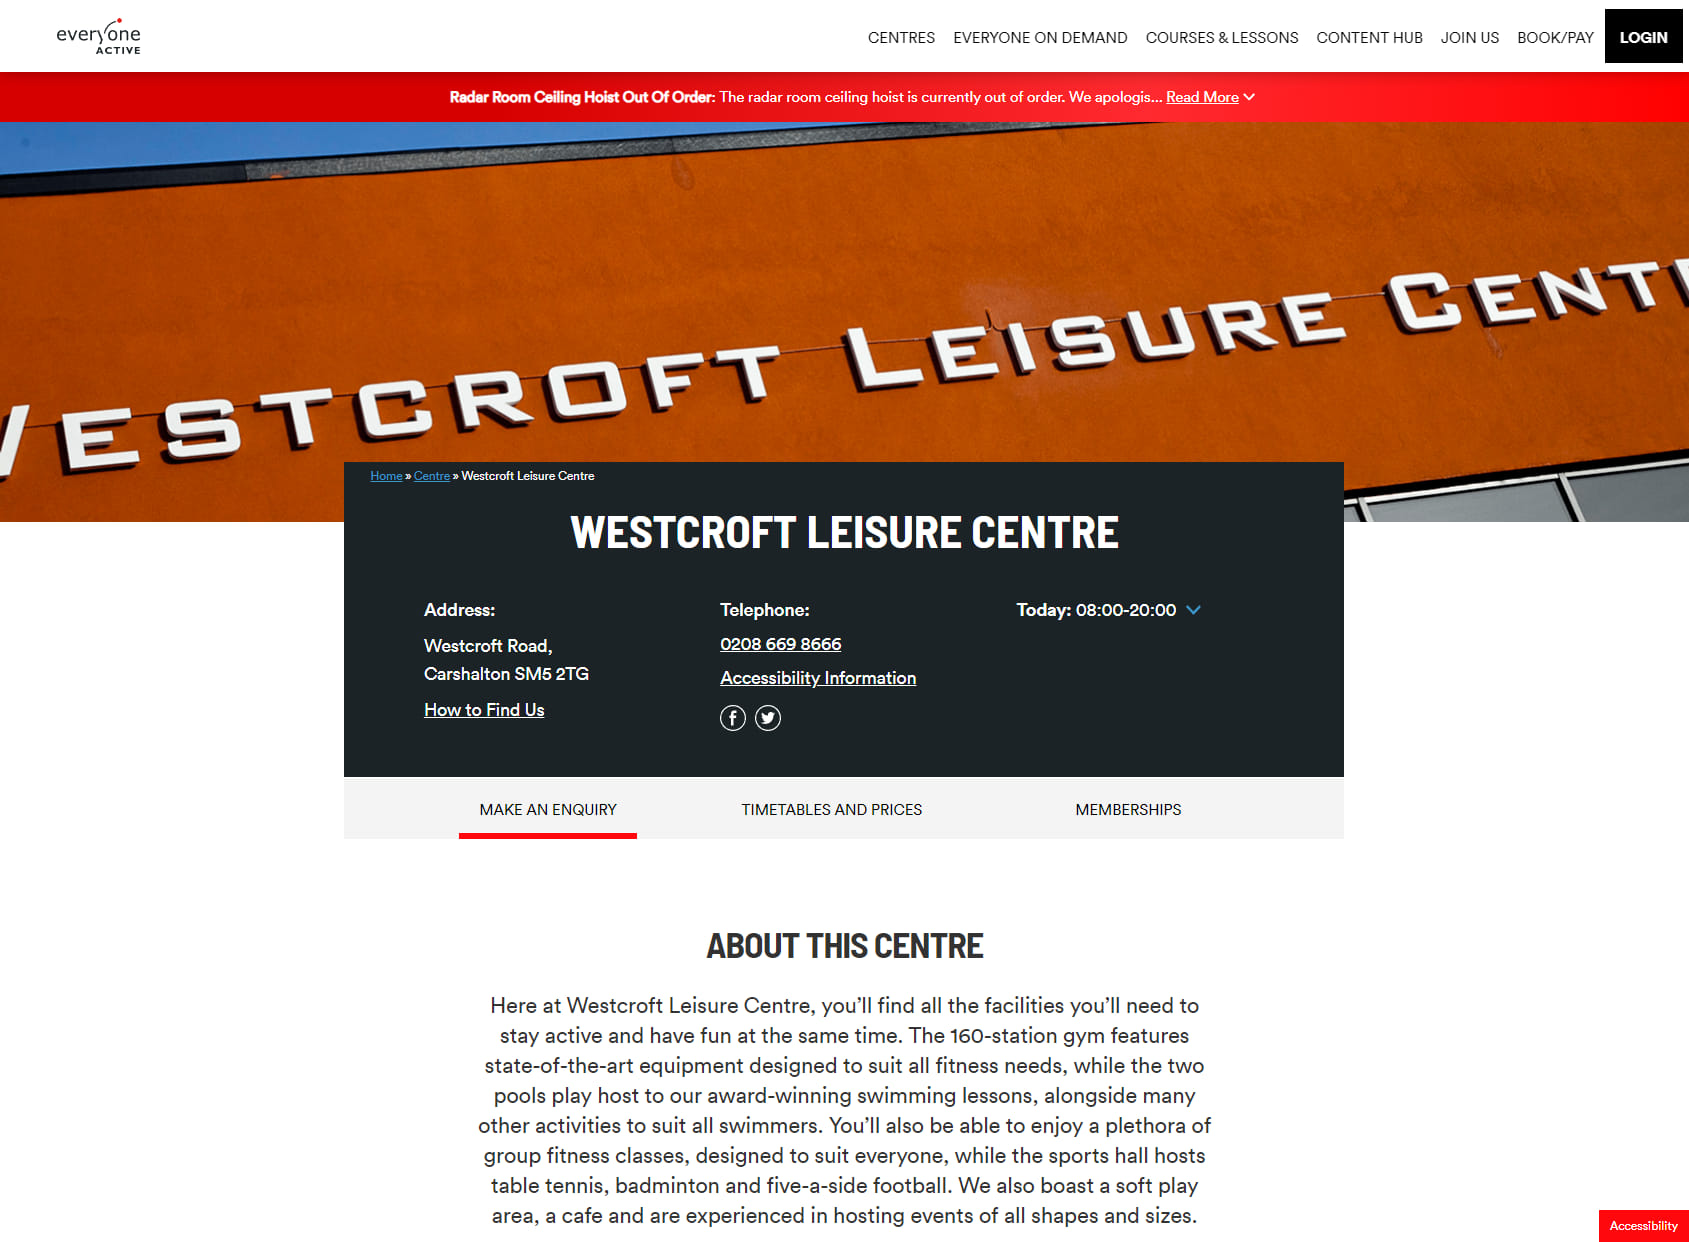 Westcroft Leisure Centre